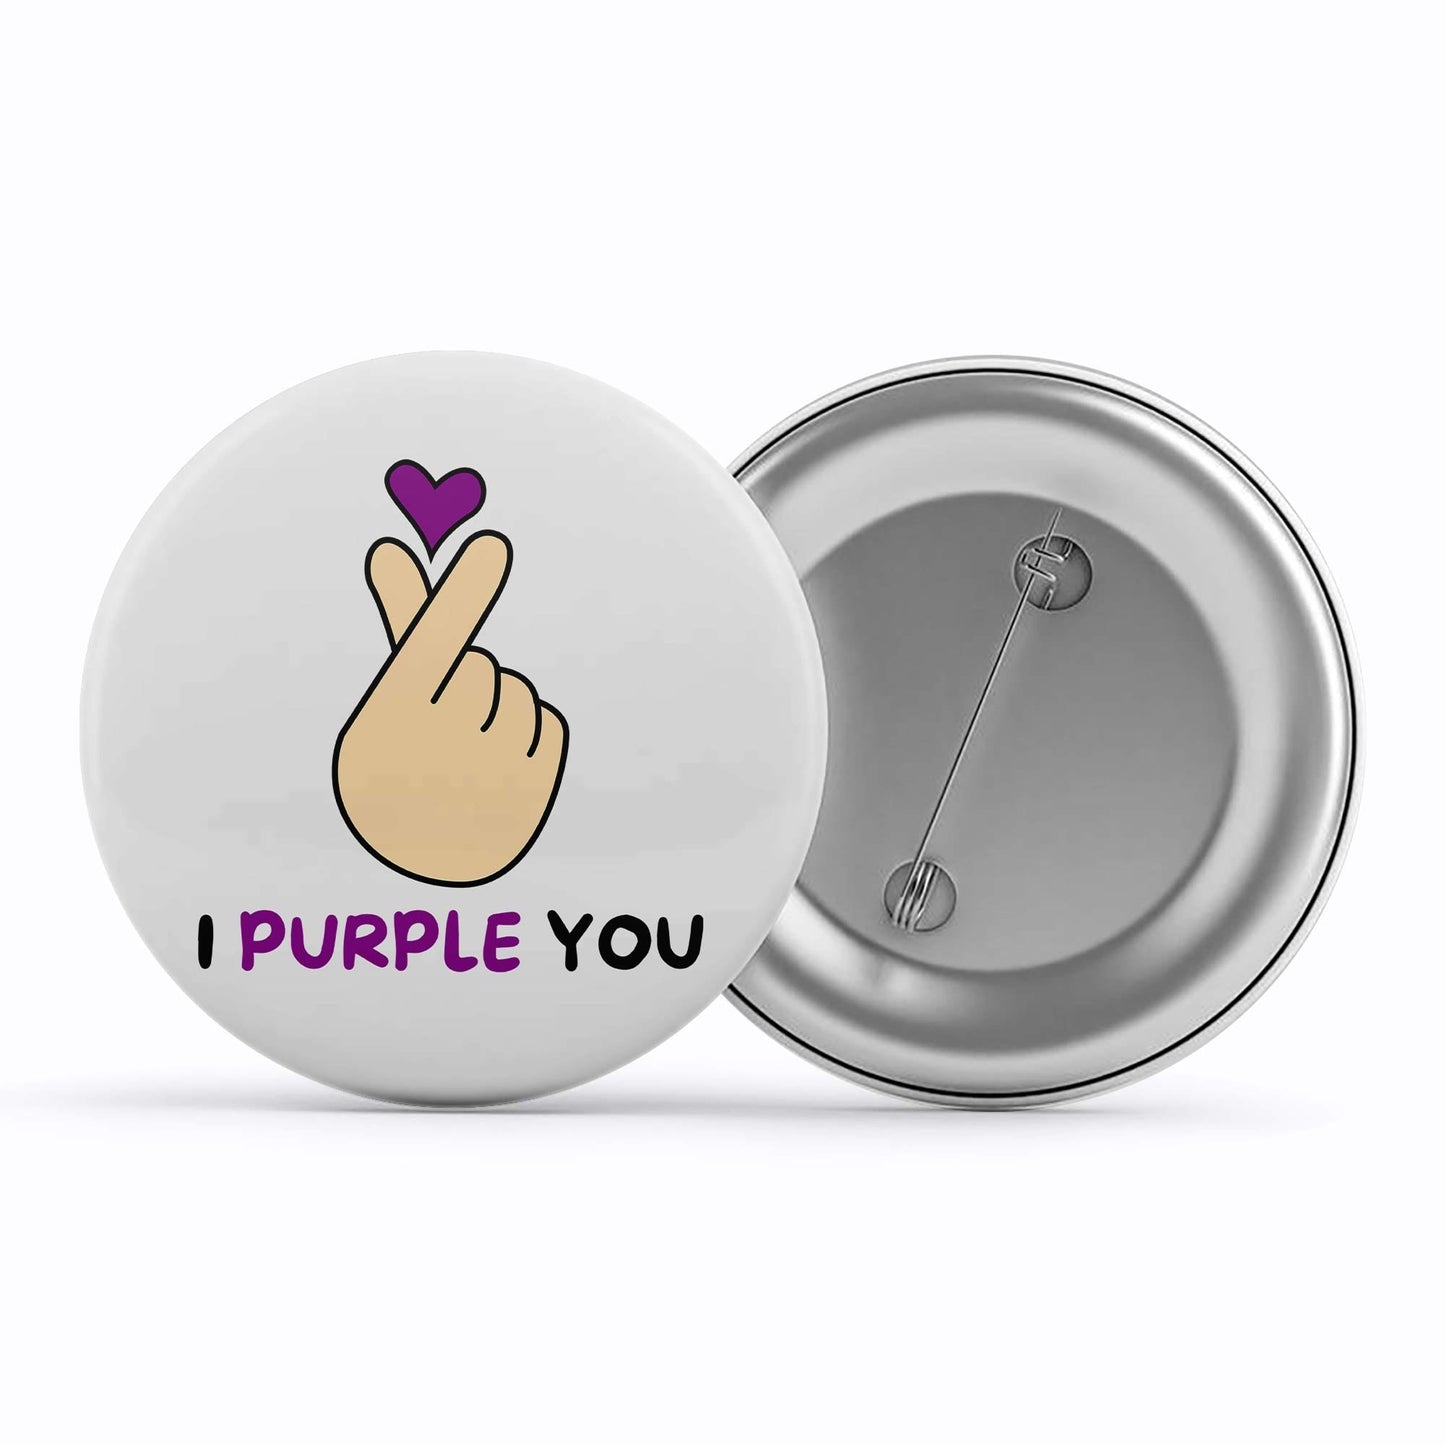 bts i purple you badge pin button music band buy online india the banyan tee tbt men women girls boys unisex  